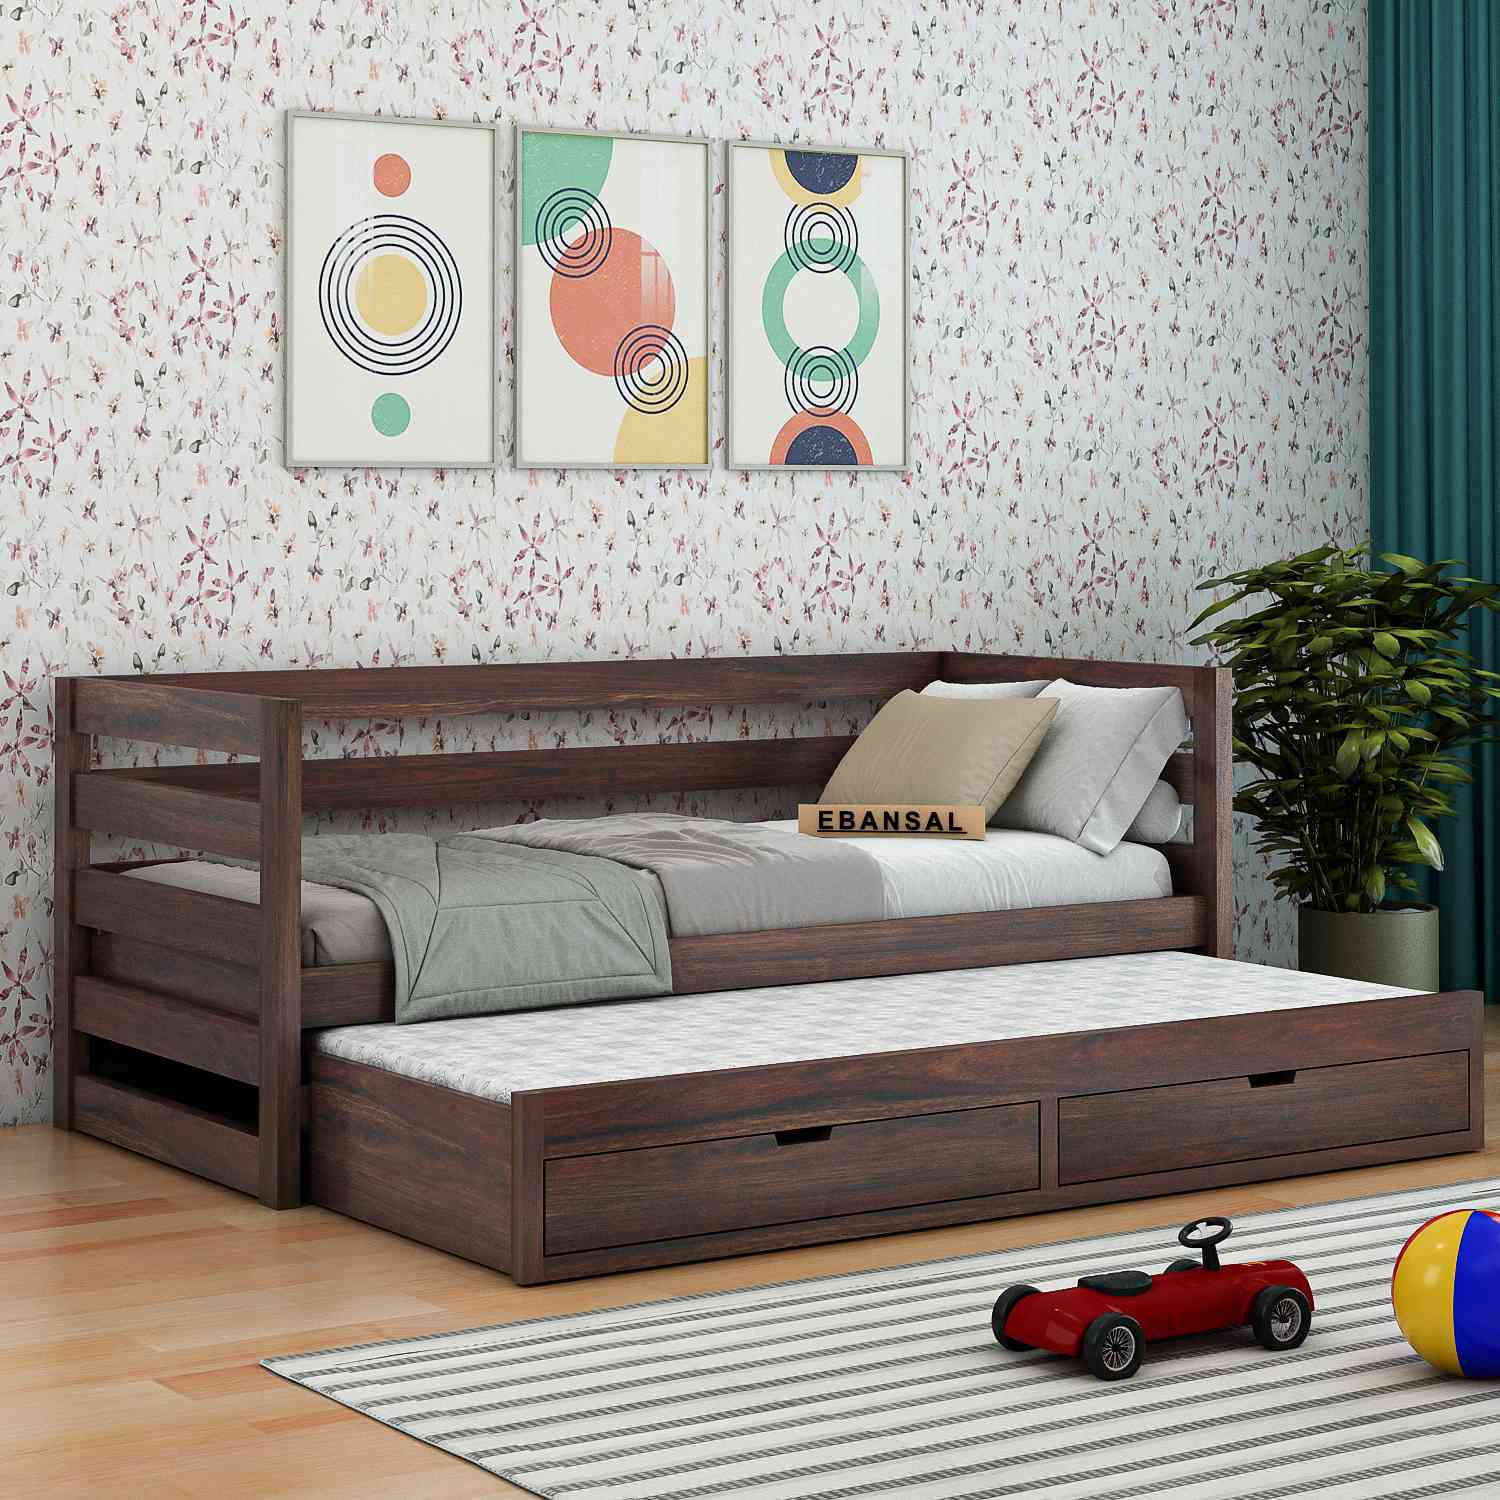 Feelinn Solid Sheesham Wood Trundle Bed For Kids (Without Mattress, Walnut Finish)